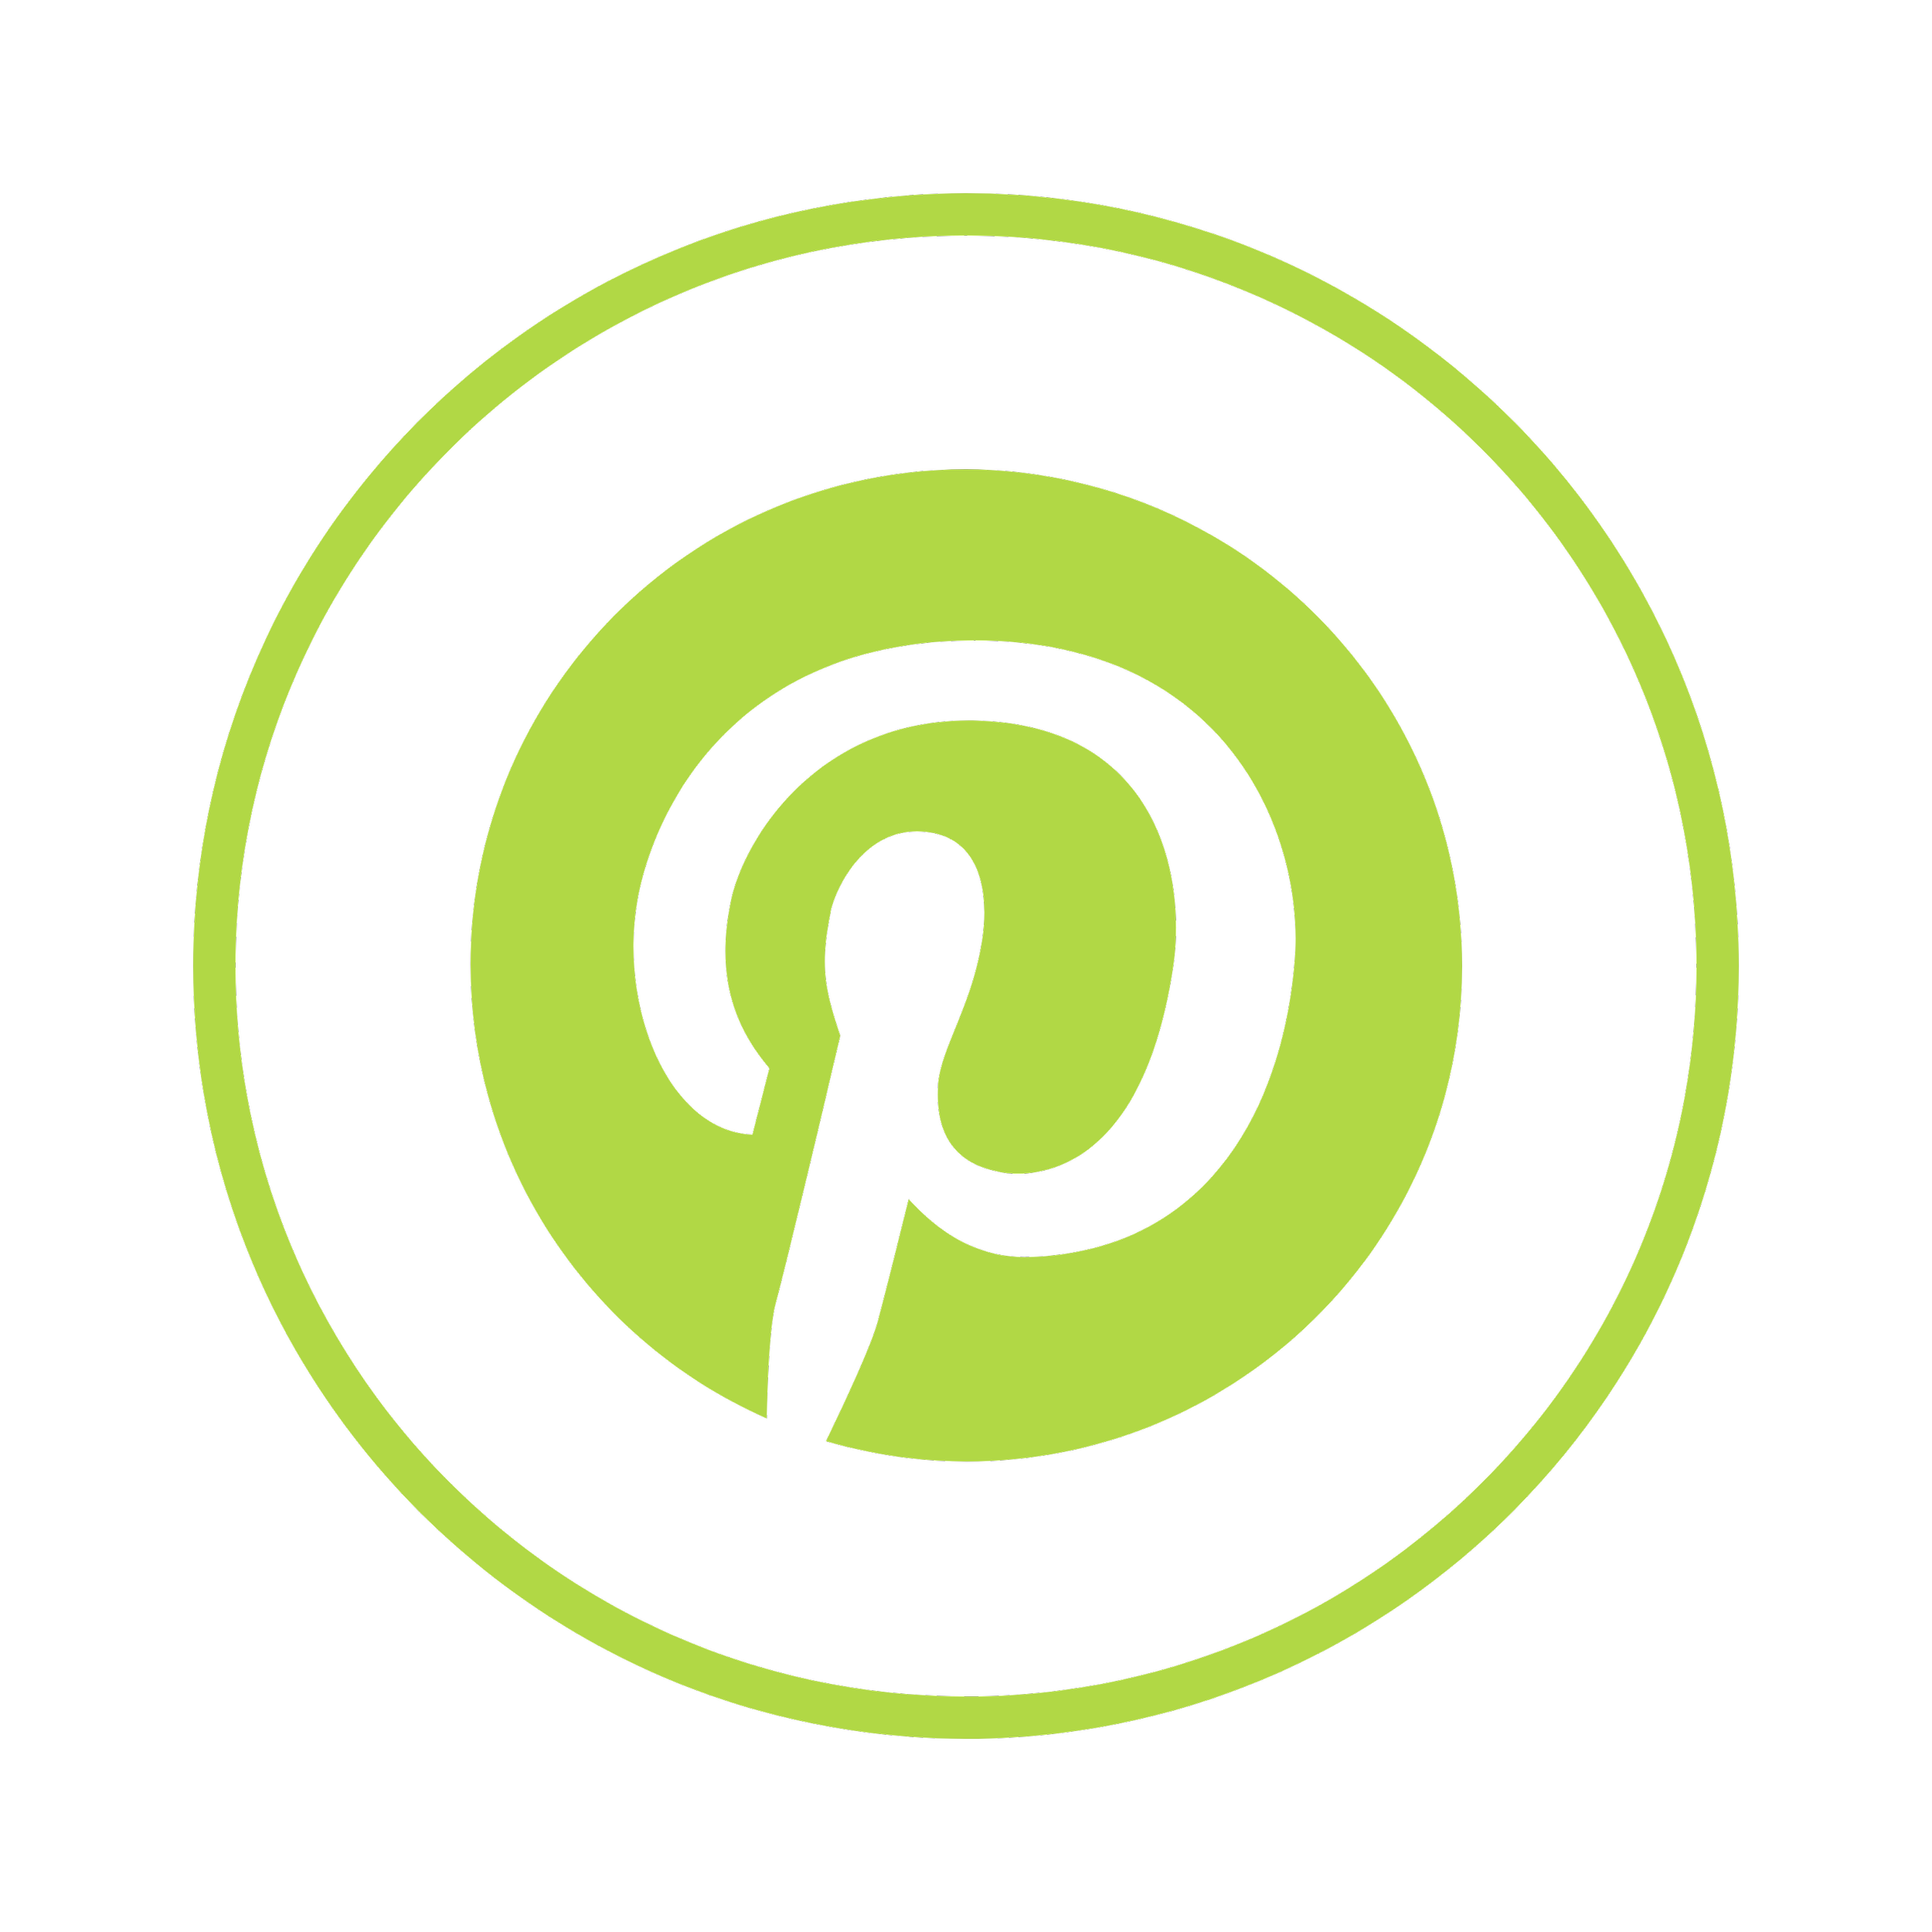 Pinterest Logo.png